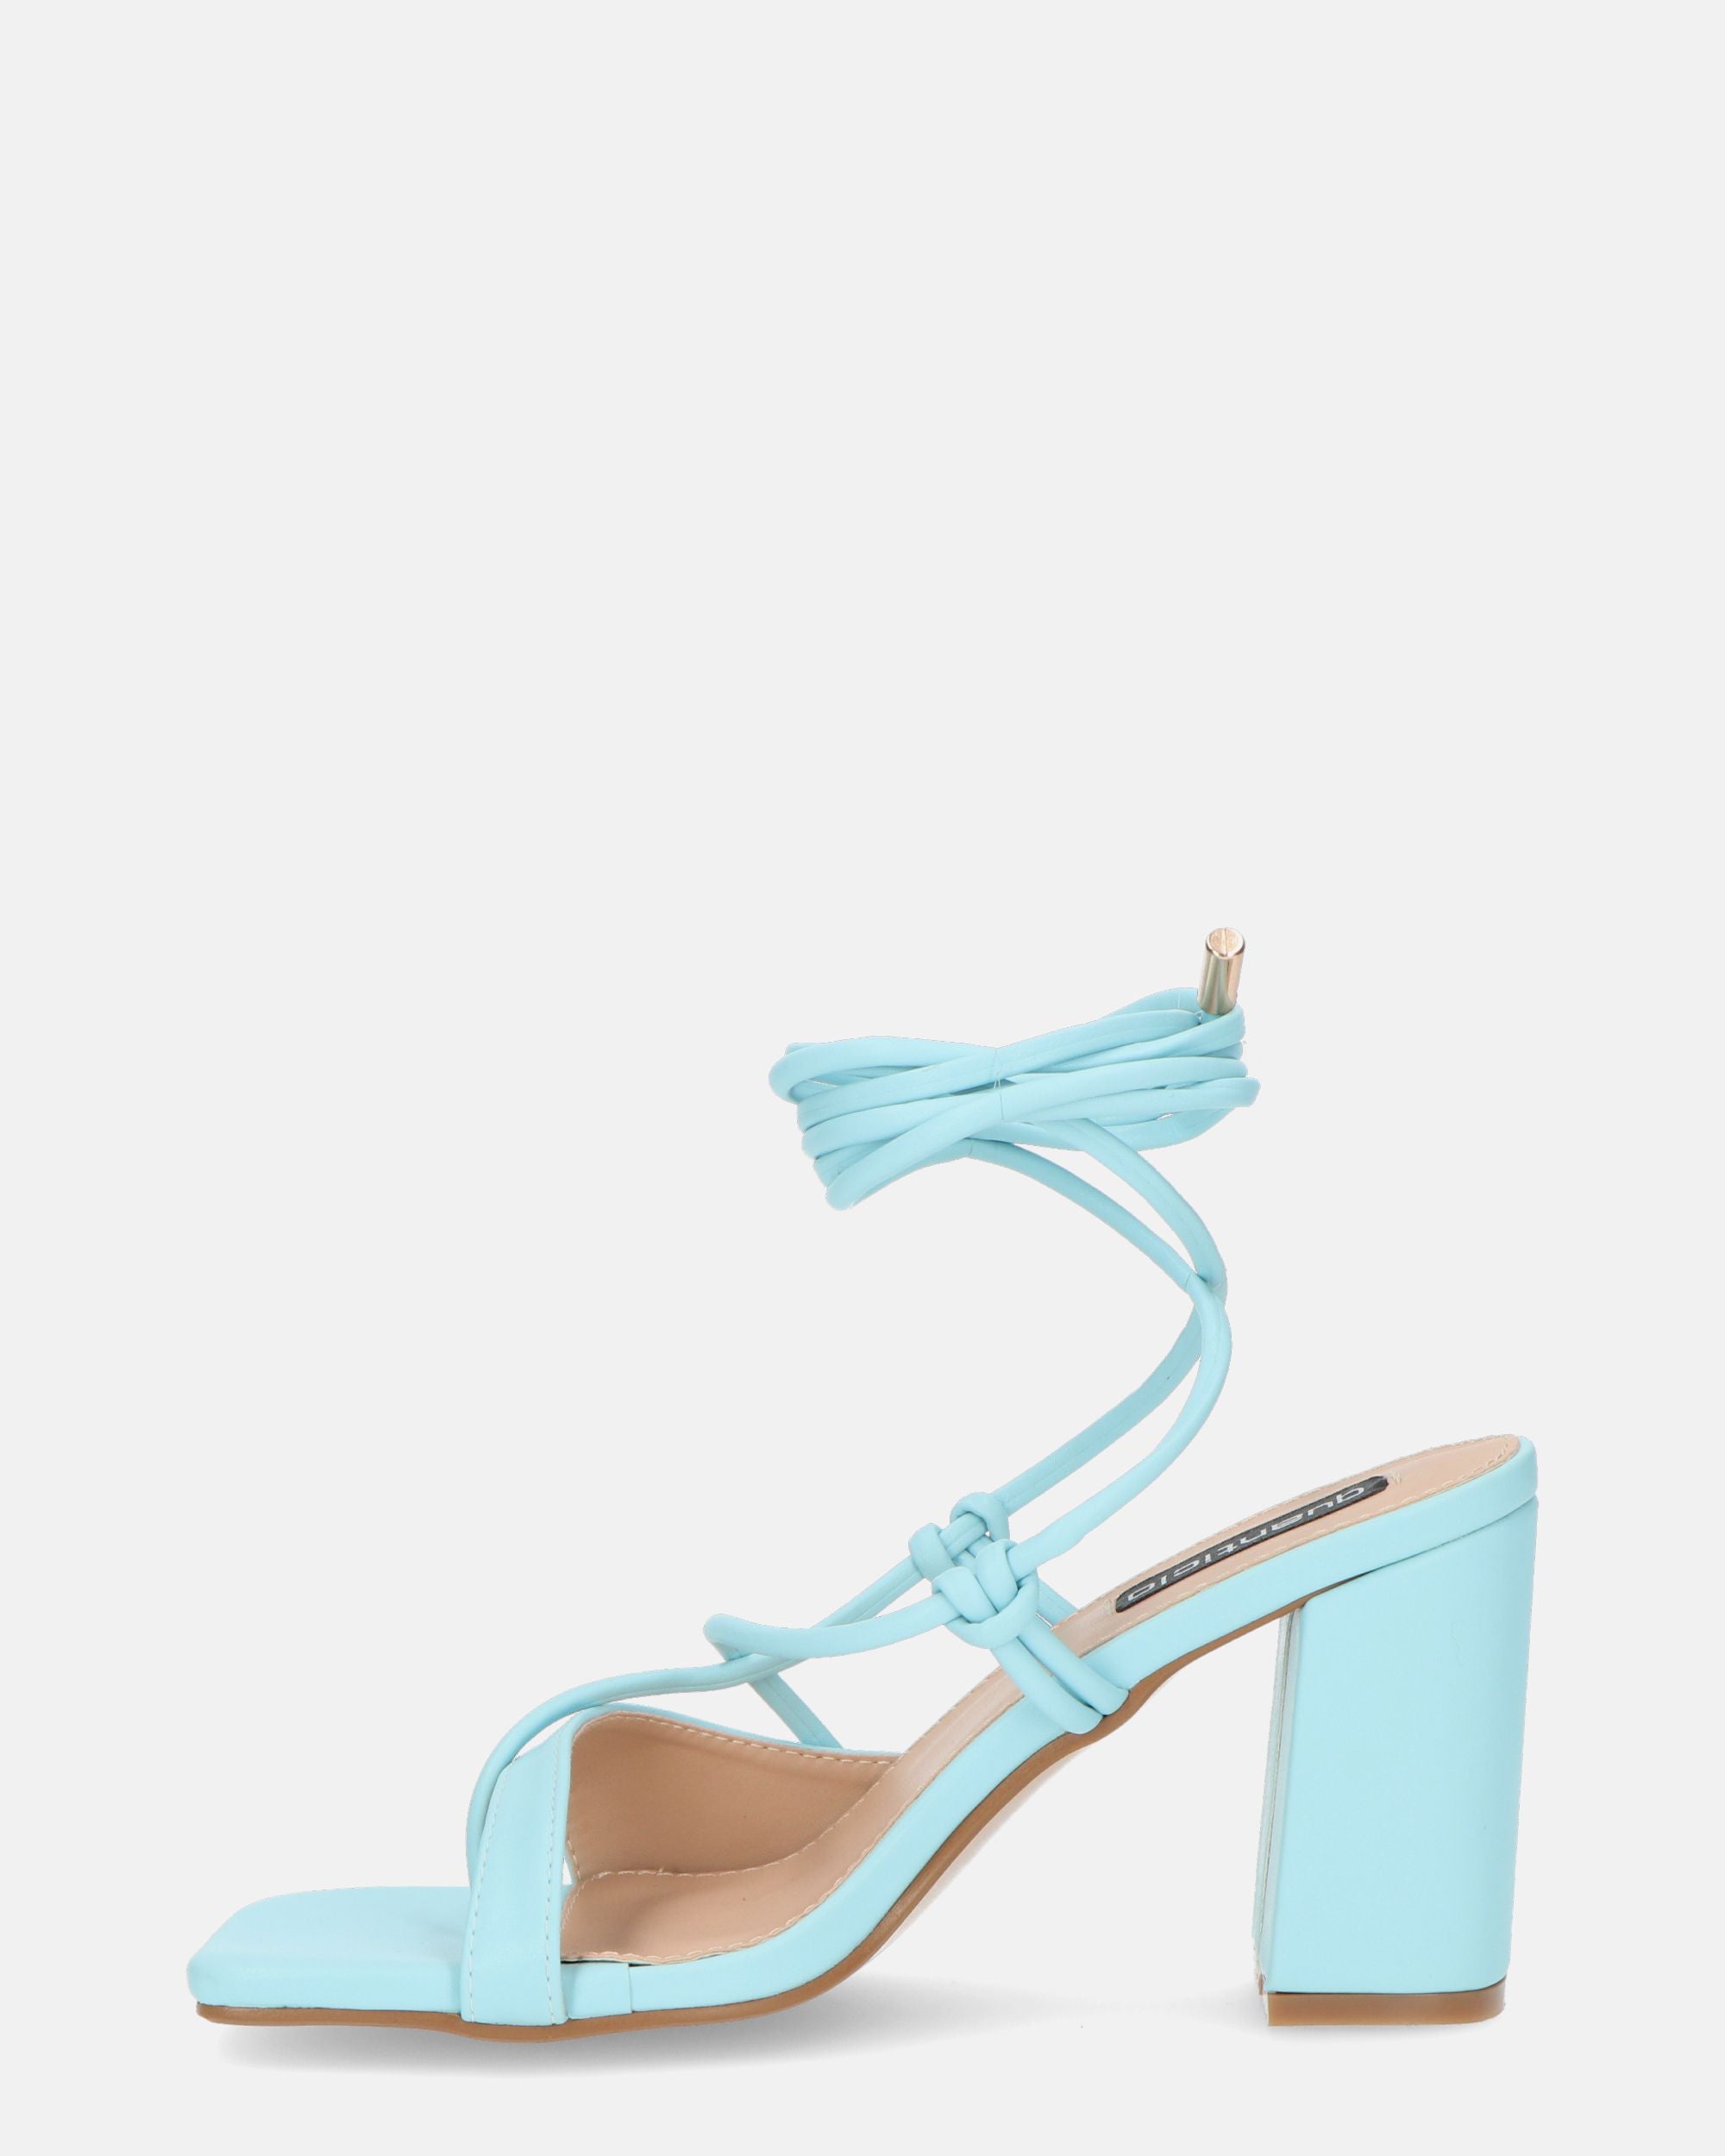 NADIYA - thong sandals with heel in light blue PU